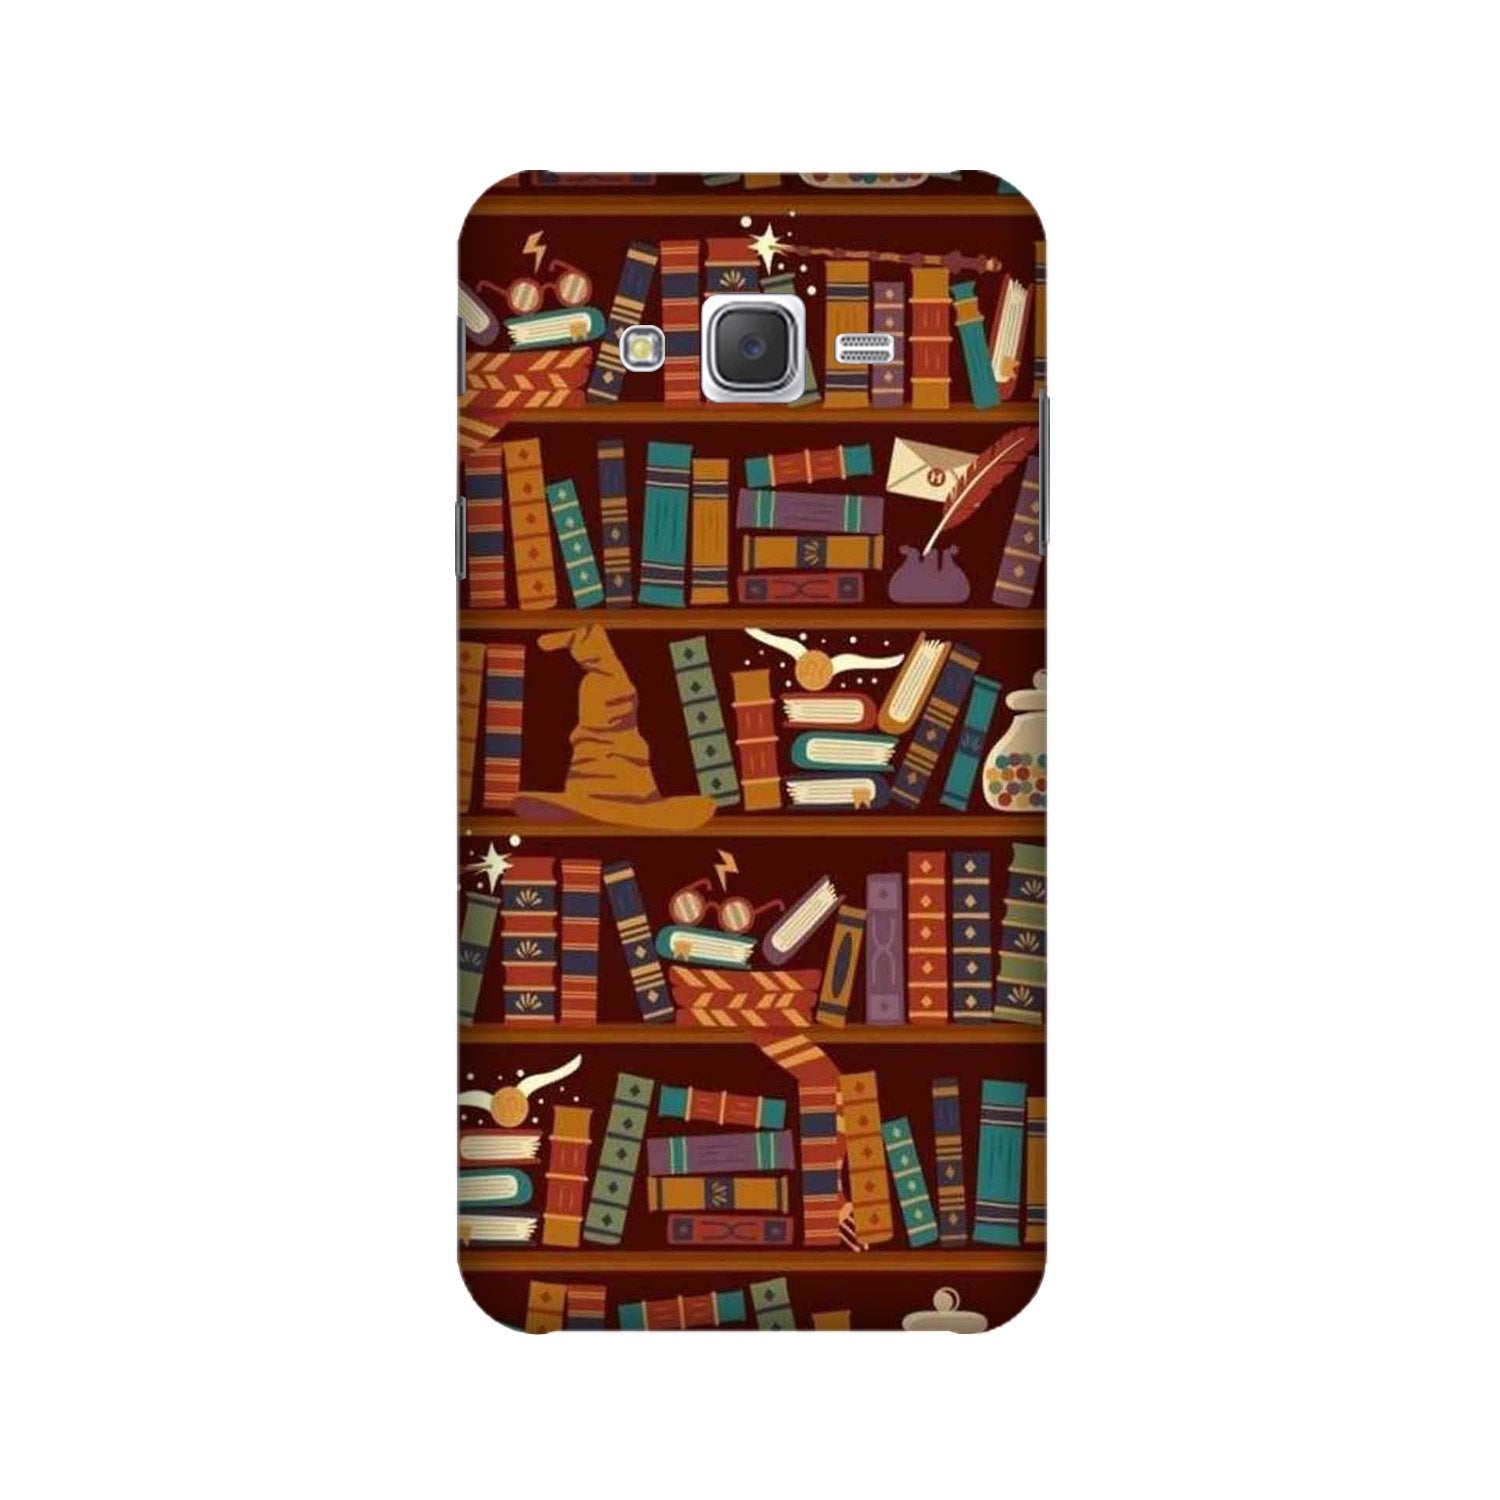 Book Shelf Mobile Back Case for Galaxy J5 (2016) (Design - 390)